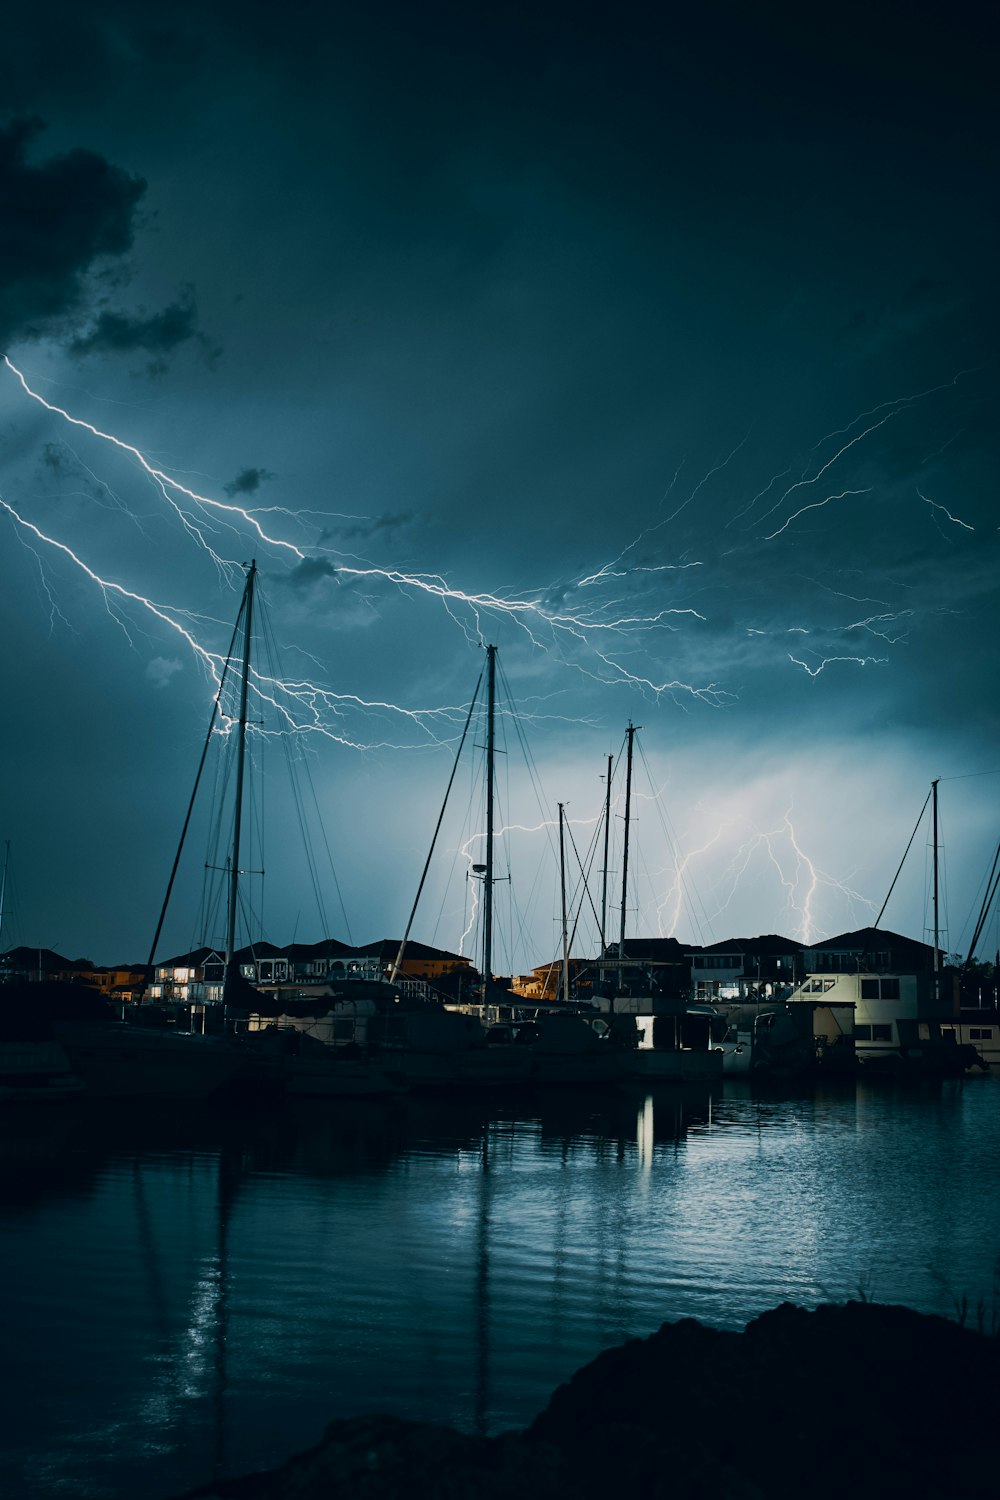 lightning on the sky during nighttime